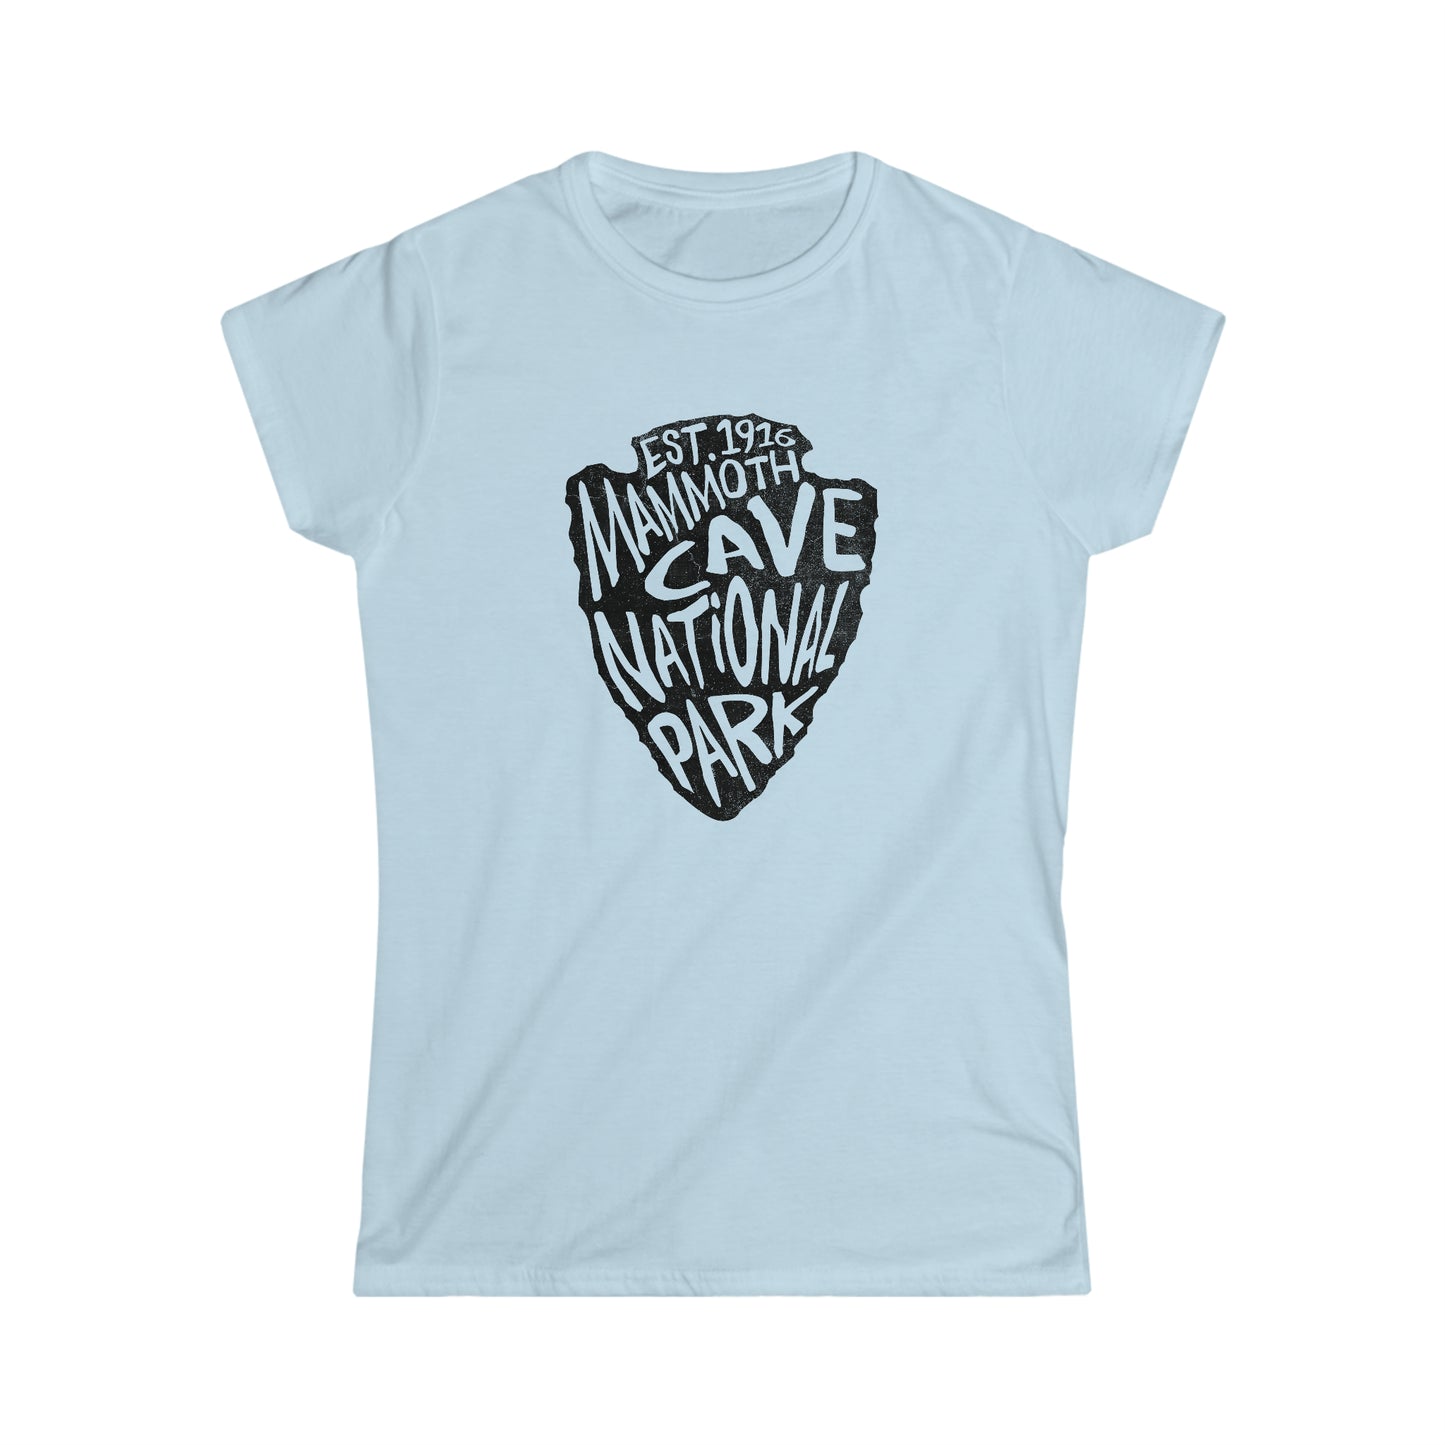 Mammoth Cave National Park Women's T-Shirt - Arrowhead Design